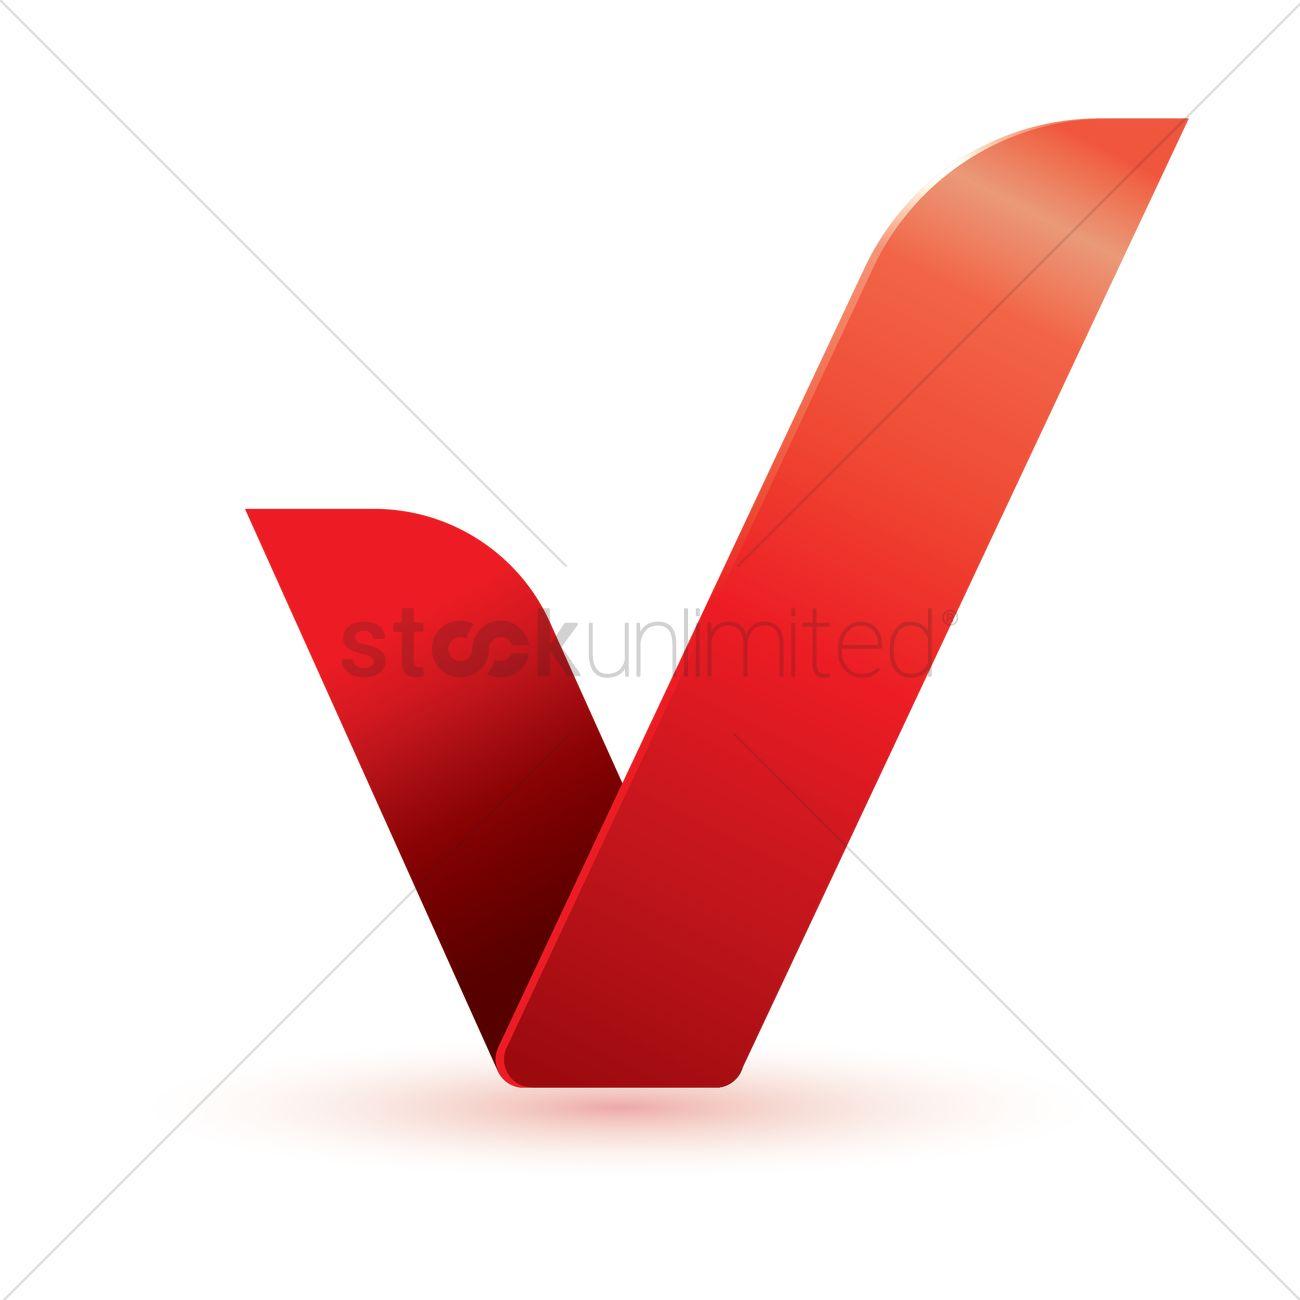 As Check Mark Logo - Checkmark logo element Vector Image - 1823428 | StockUnlimited